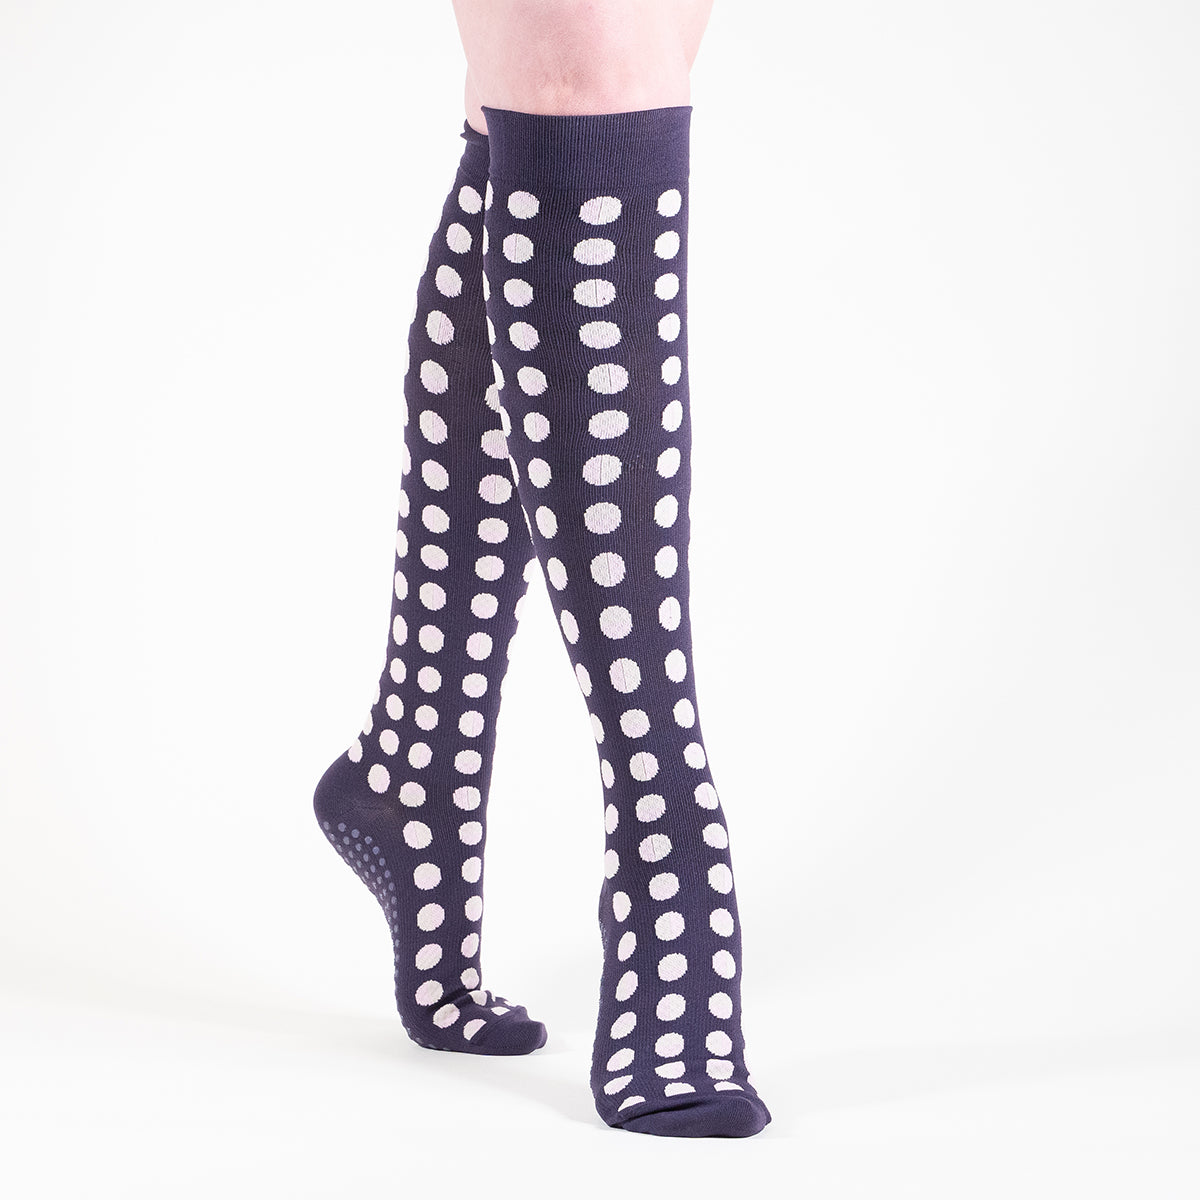 Kiley Compression Knee High Grip Sock - Purple/Dot